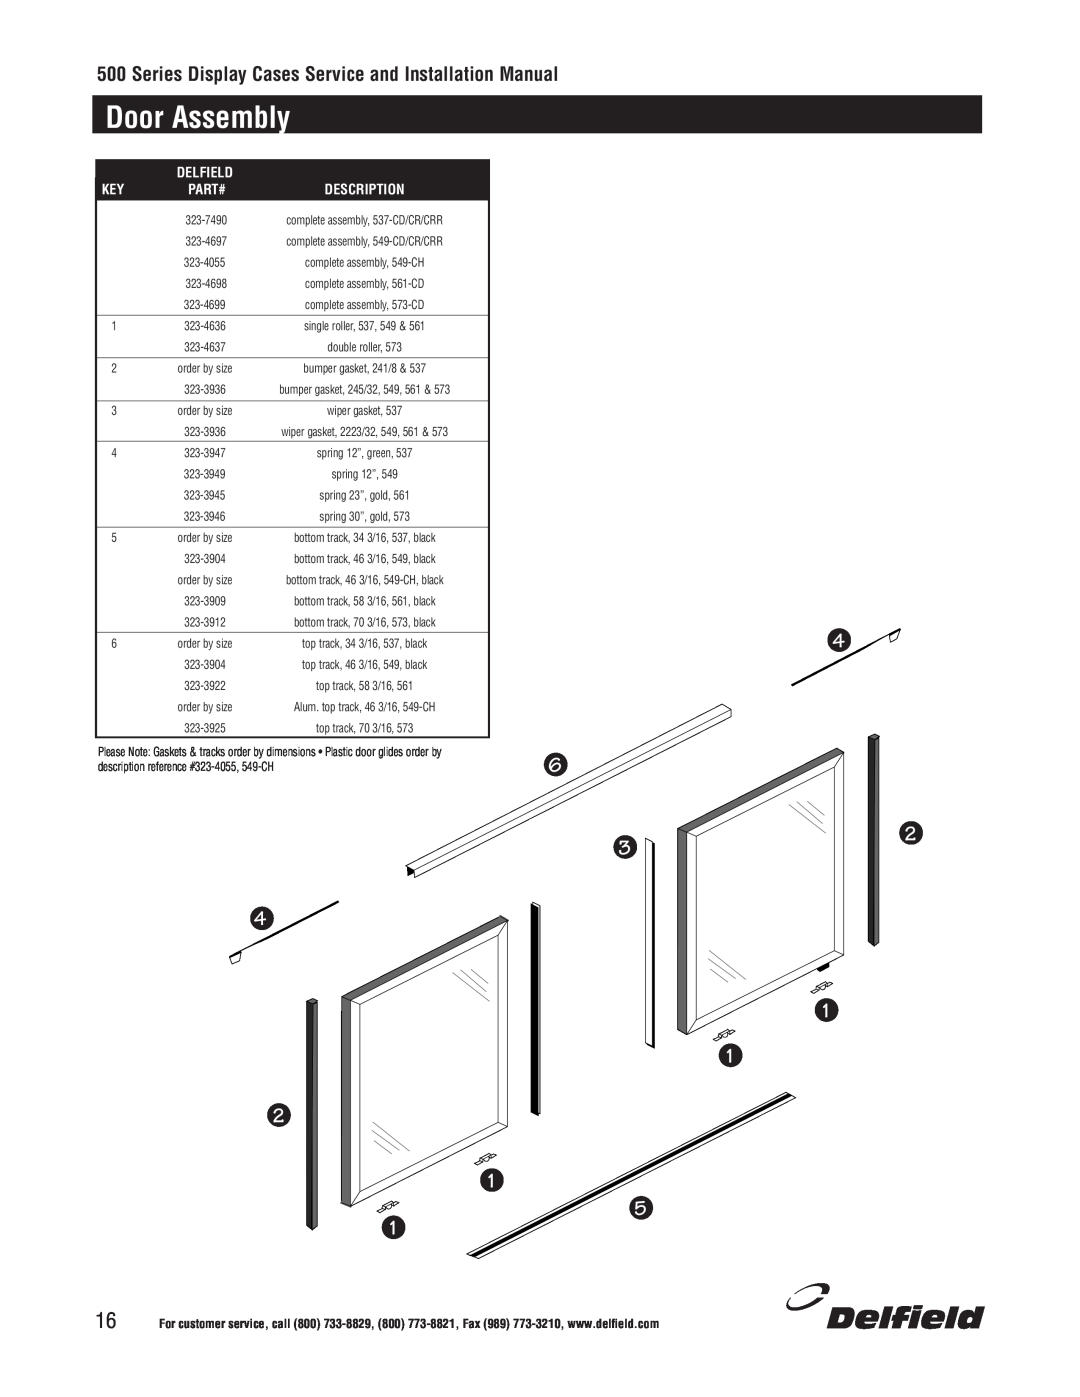 Delfield 500 Door Assembly, Series Display Cases Service and Installation Manual, Part#, Delfield, Description 